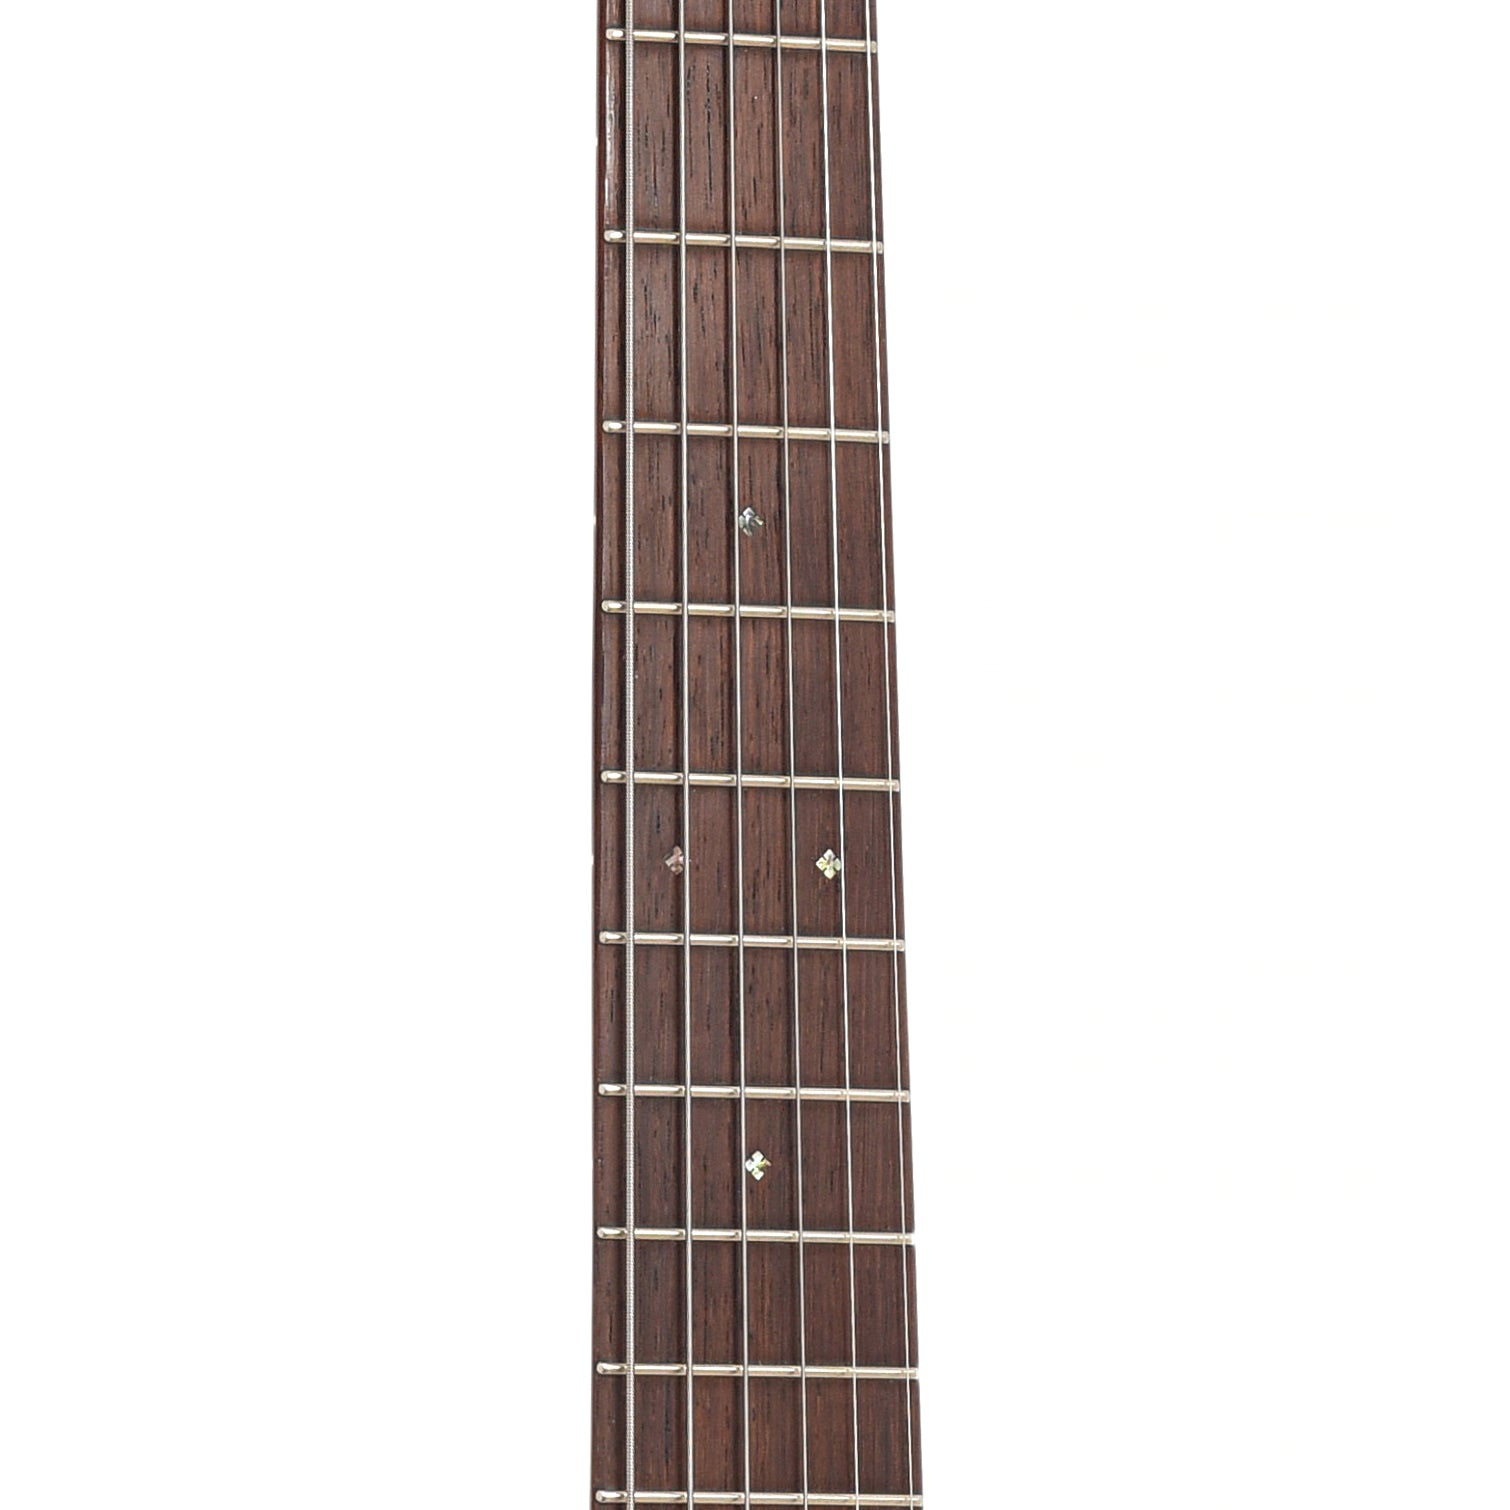 Fretboard of Martin CS21-11 Acoustic Guitar